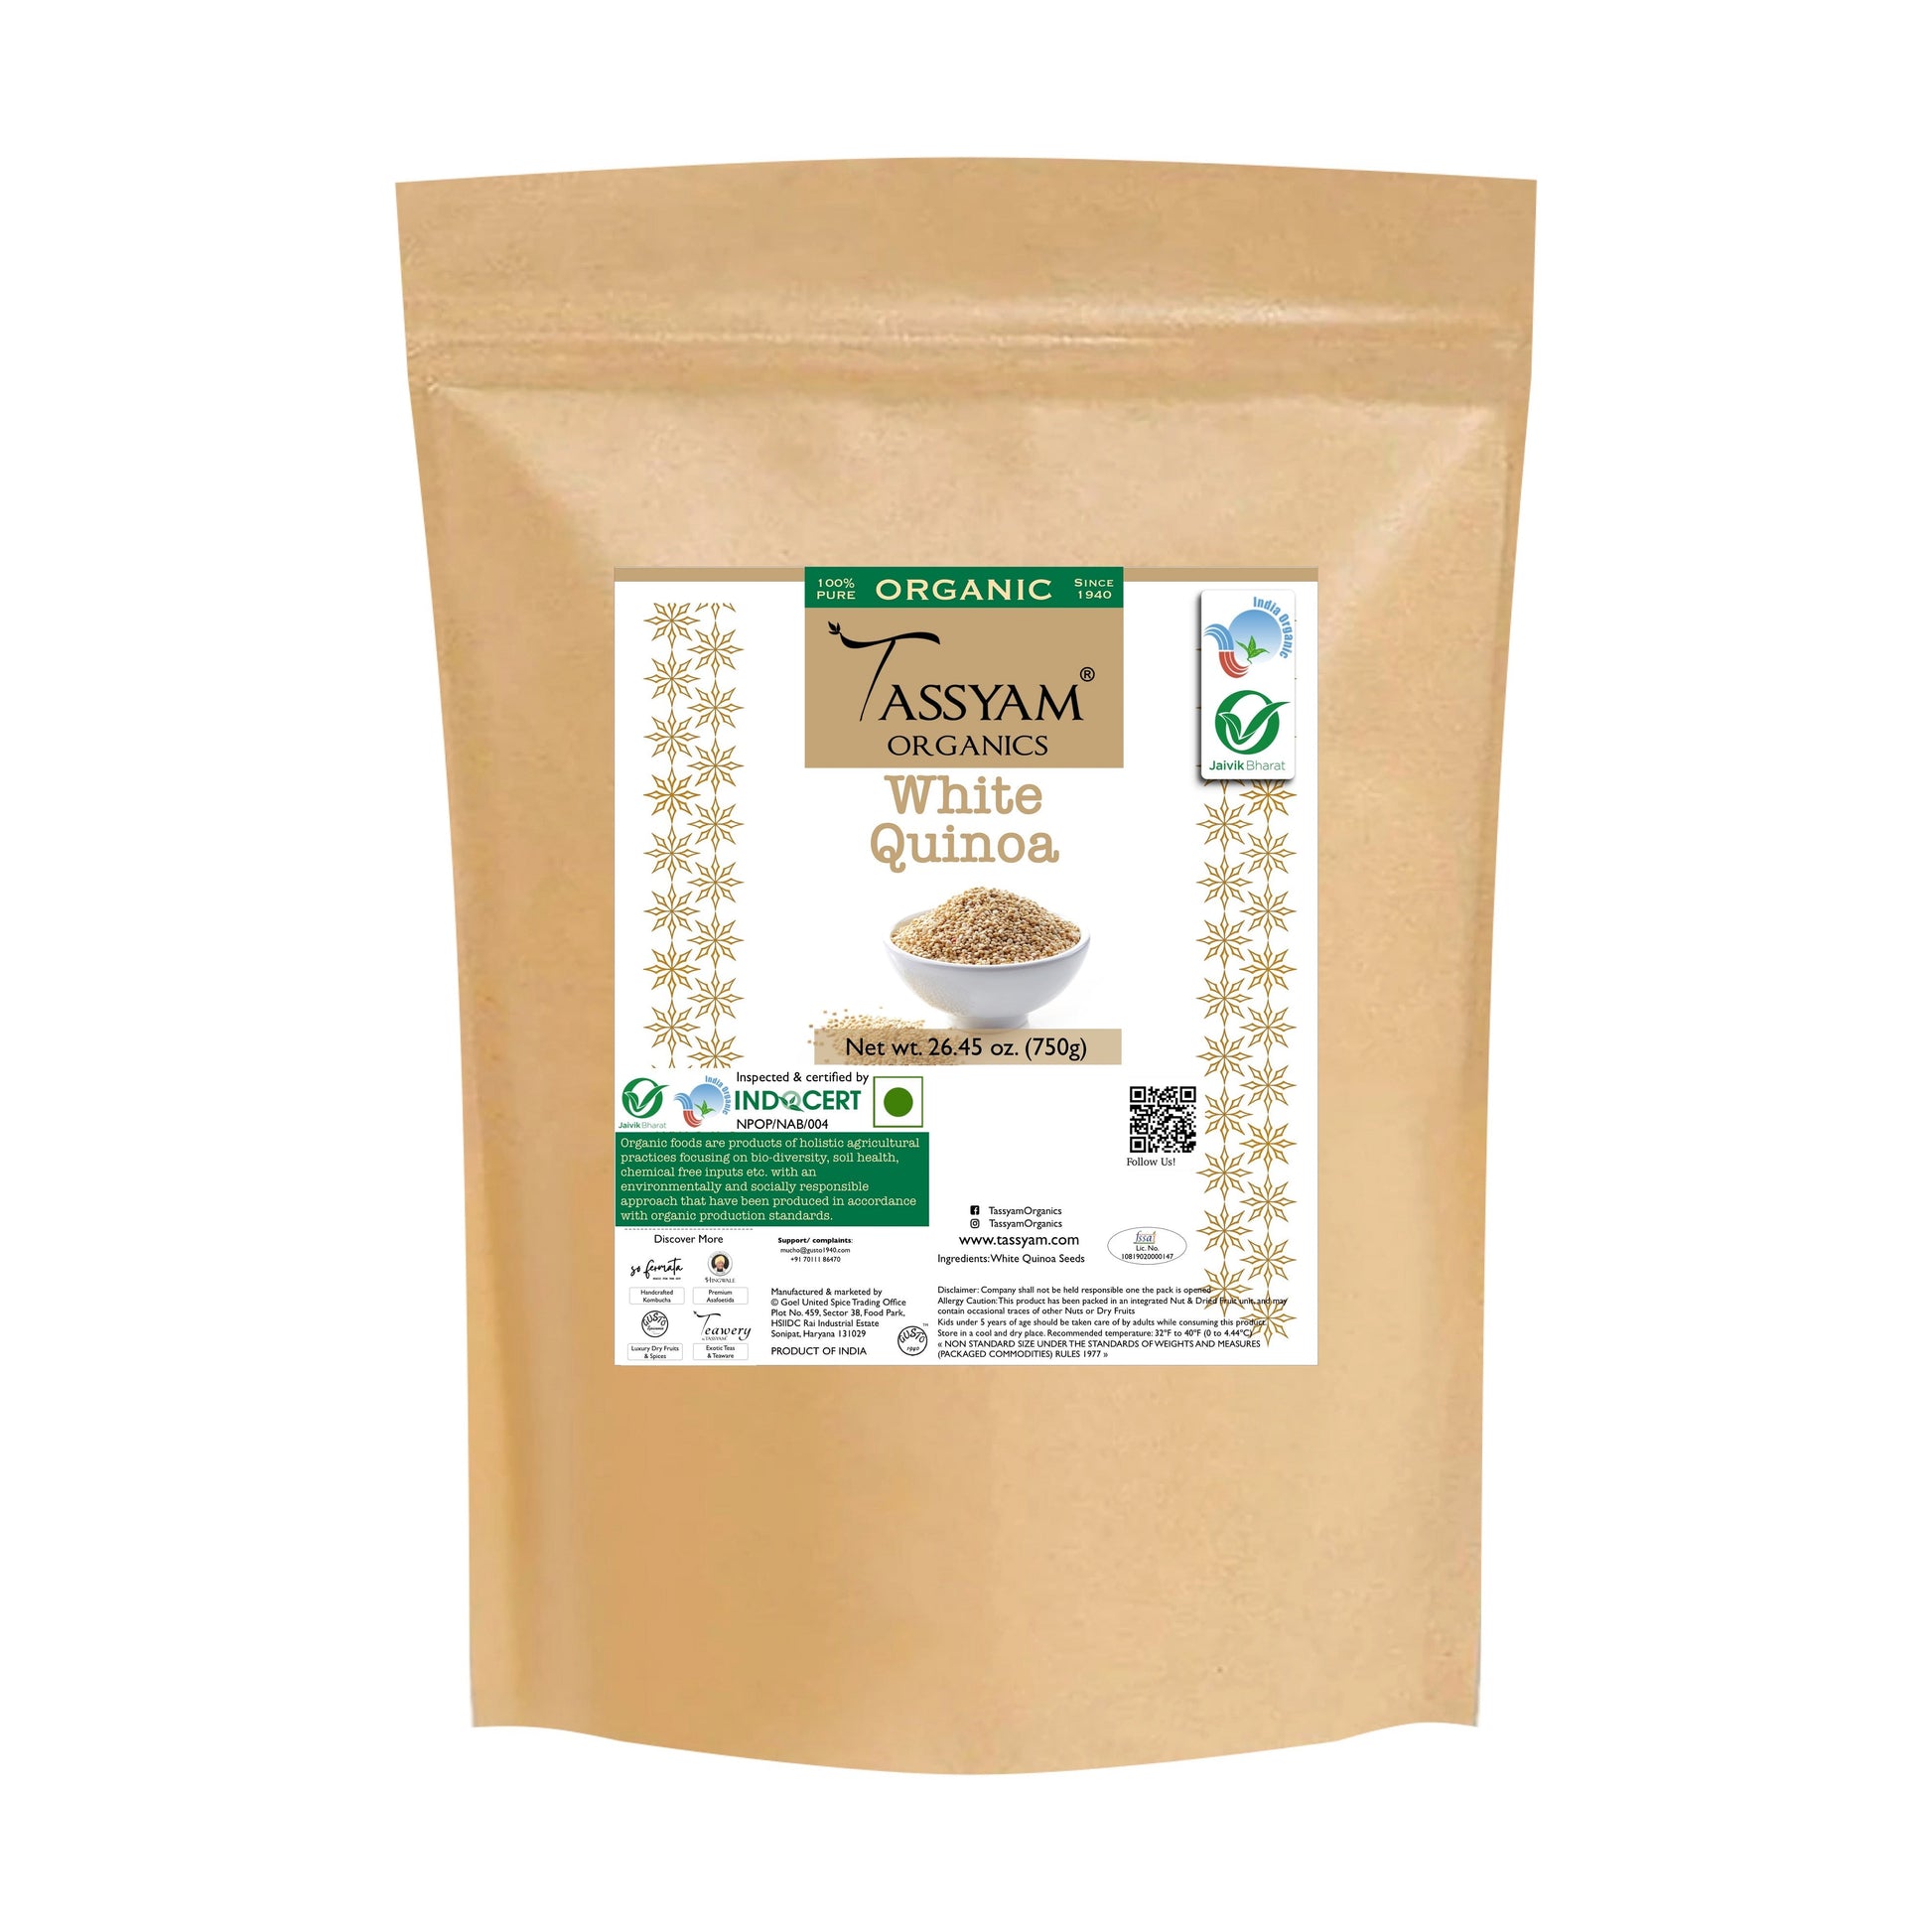 Certified Organic Whole White Quinoa Grain, 750g Pouch - Tassyam Organics